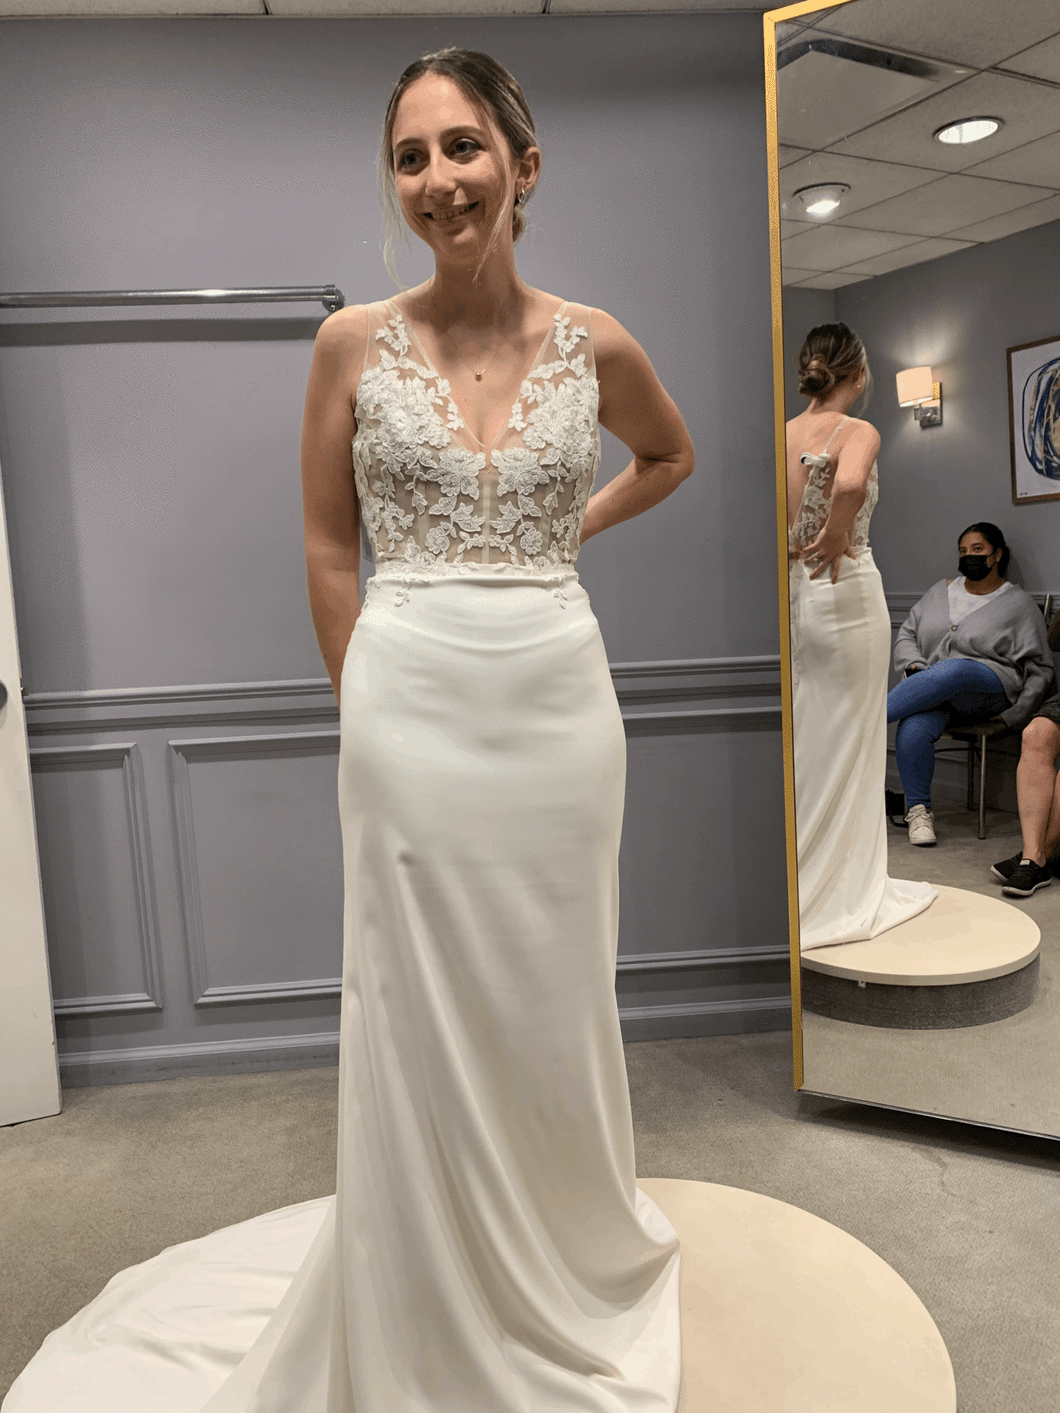 Rebecca Schoneveld 'Frieda' wedding dress size-06 NEW